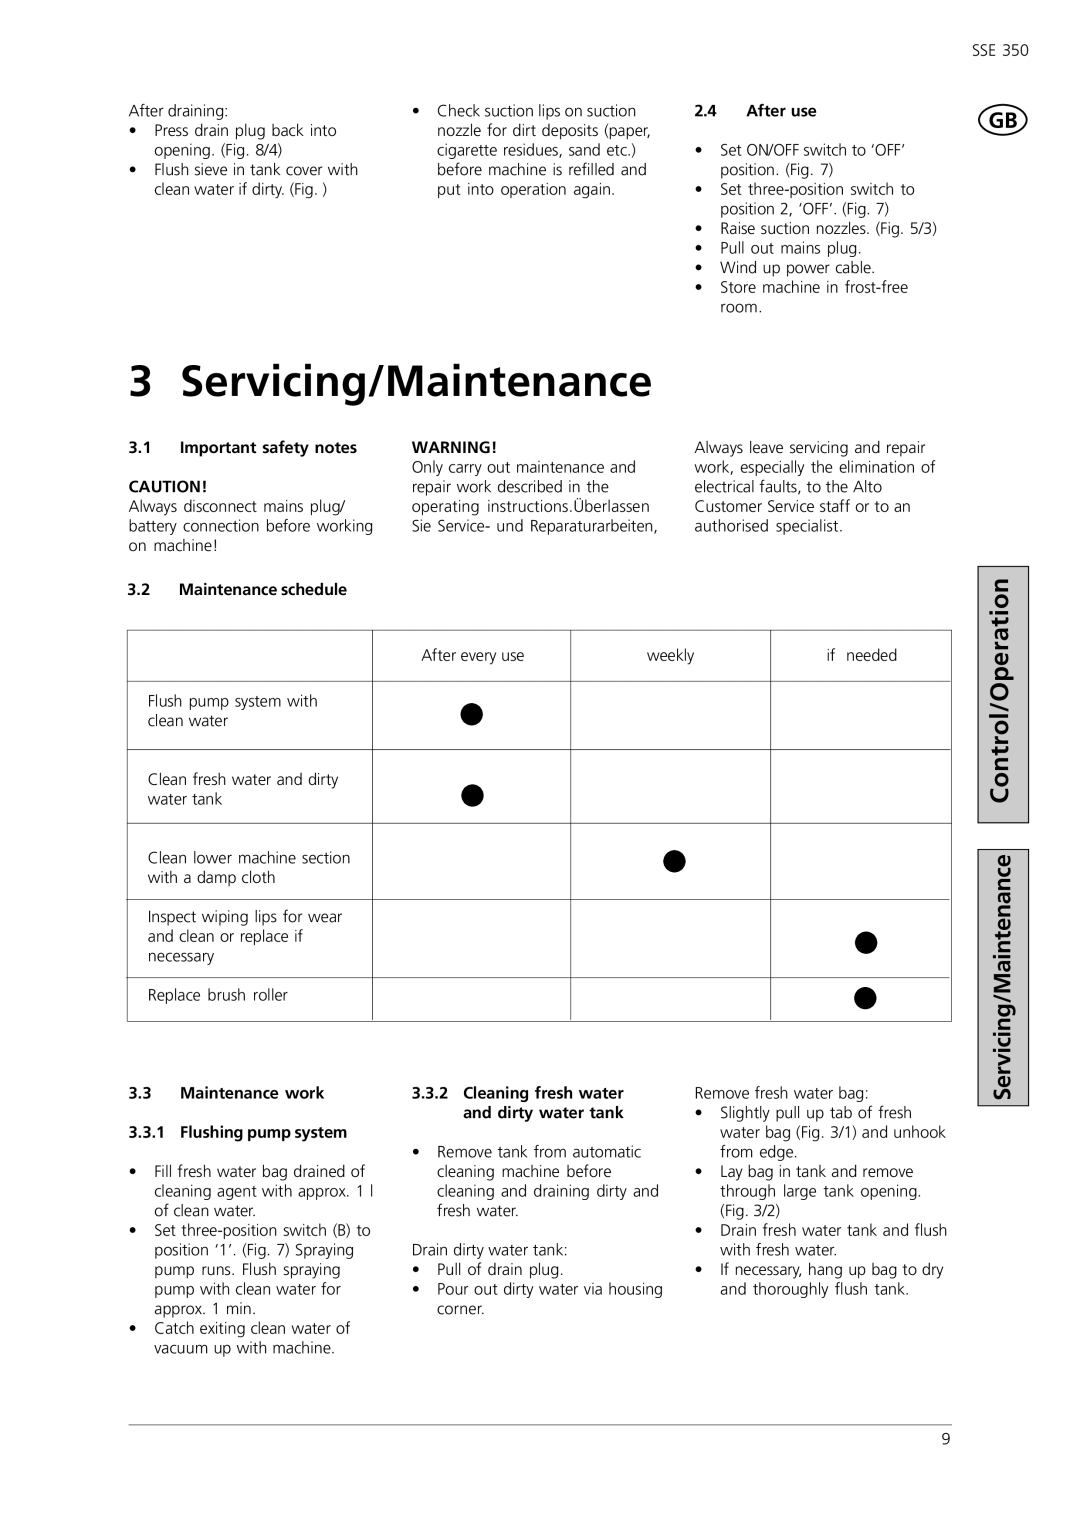 Nilfisk-ALTO SSE 350 manual Servicing/Maintenance Control/Operation 